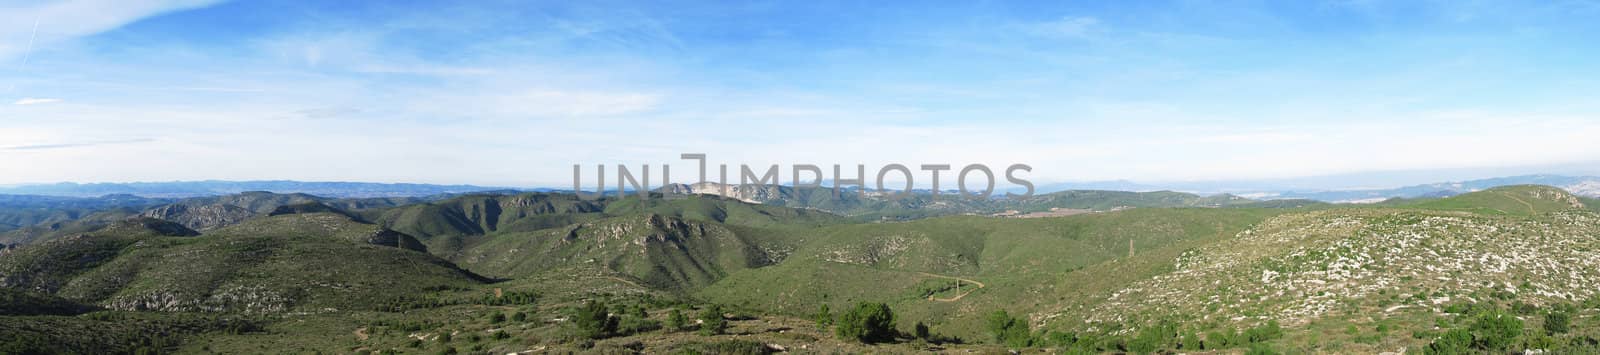 Panorama mediterranean mountains by Arrxxx